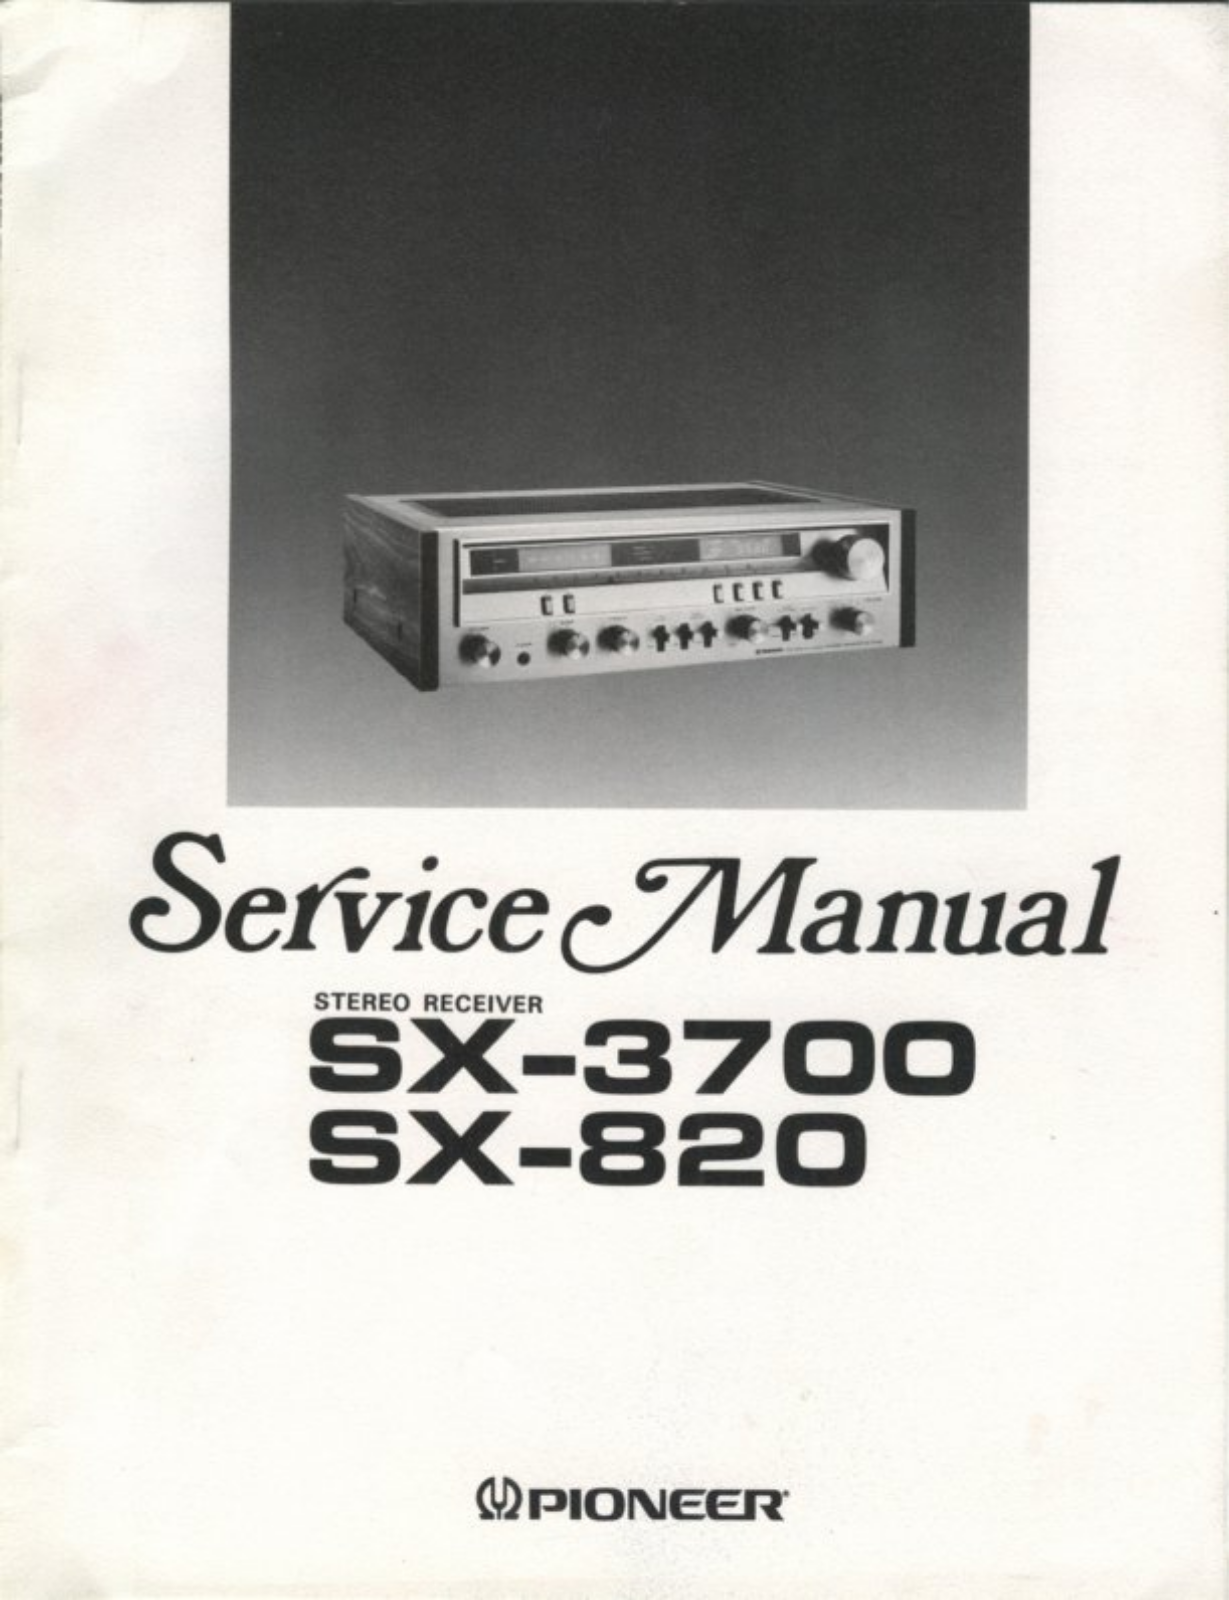 Pioneer SX-3700, SX-820 Service Manual